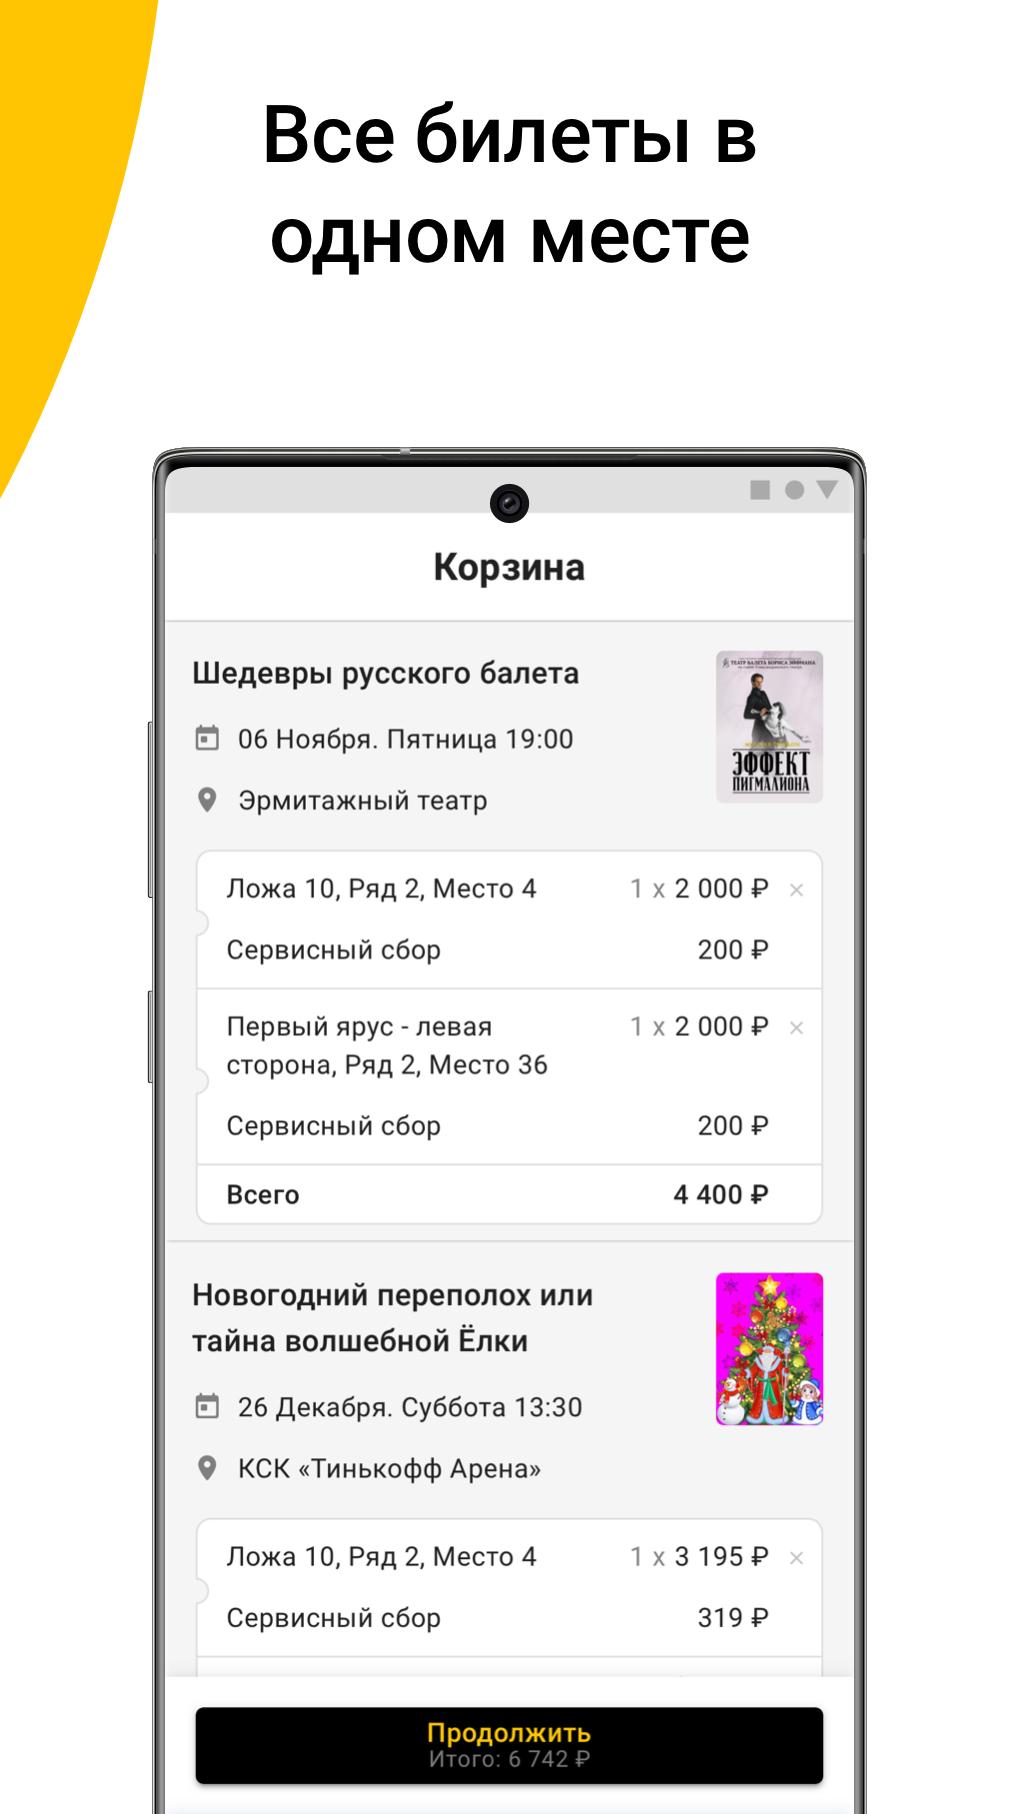 Kassir.Ru: Афиши и билеты на концерты и спектакли 1.0.2 Screenshot 3